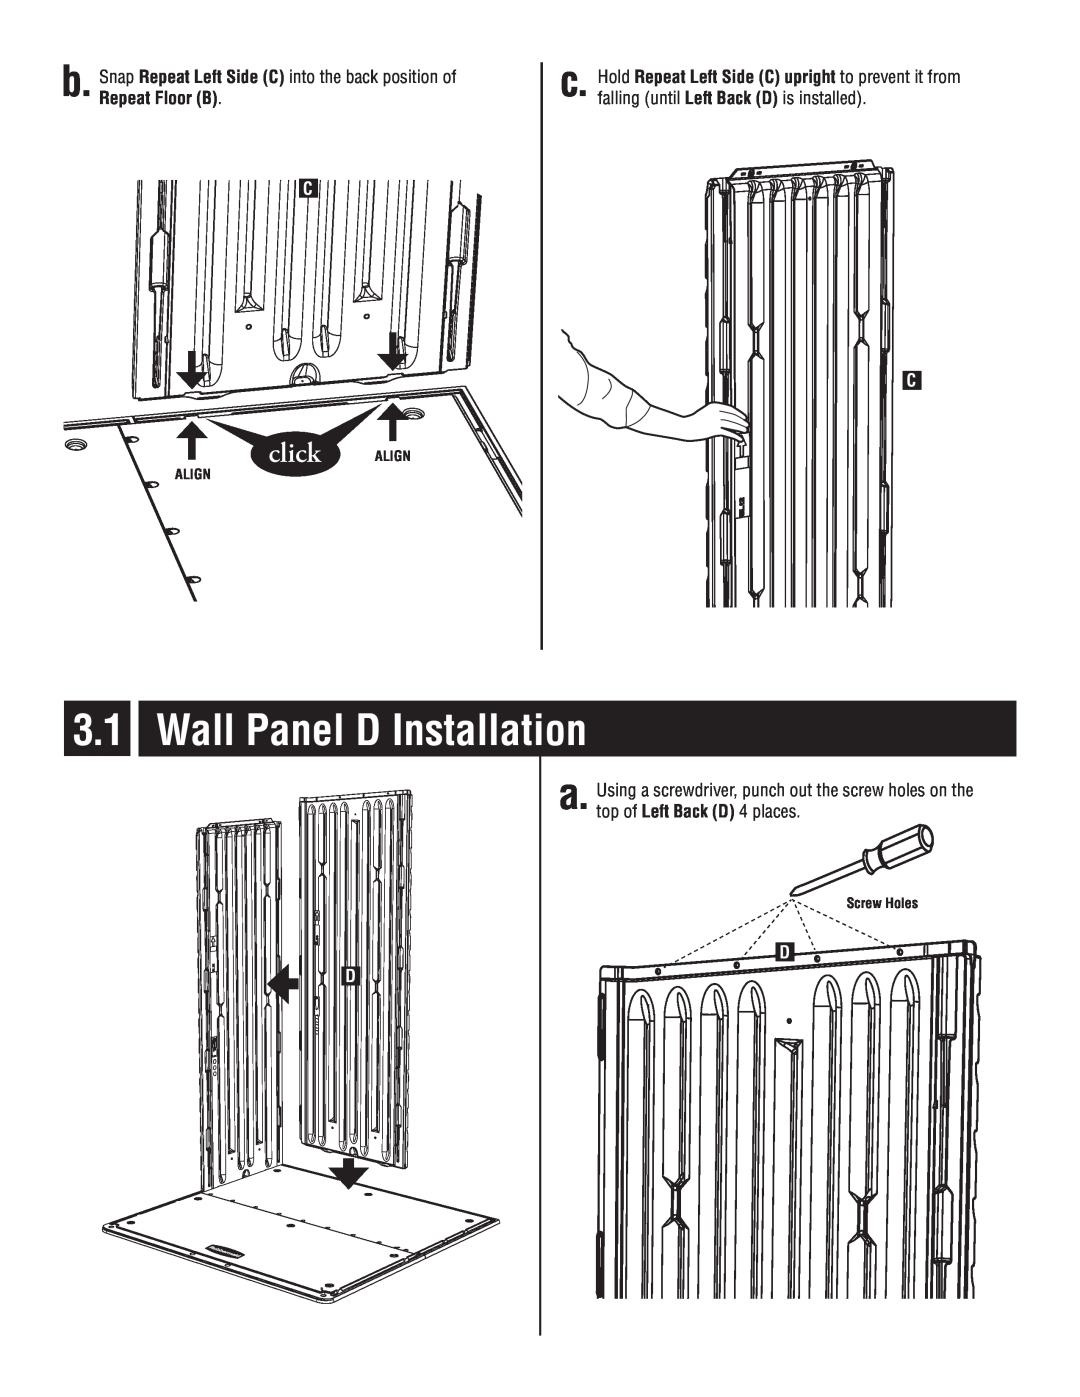 Rubbermaid P0-5L20-P0 instruction manual Wall Panel D Installation a, click ALIGN, Align, Screw Holes 